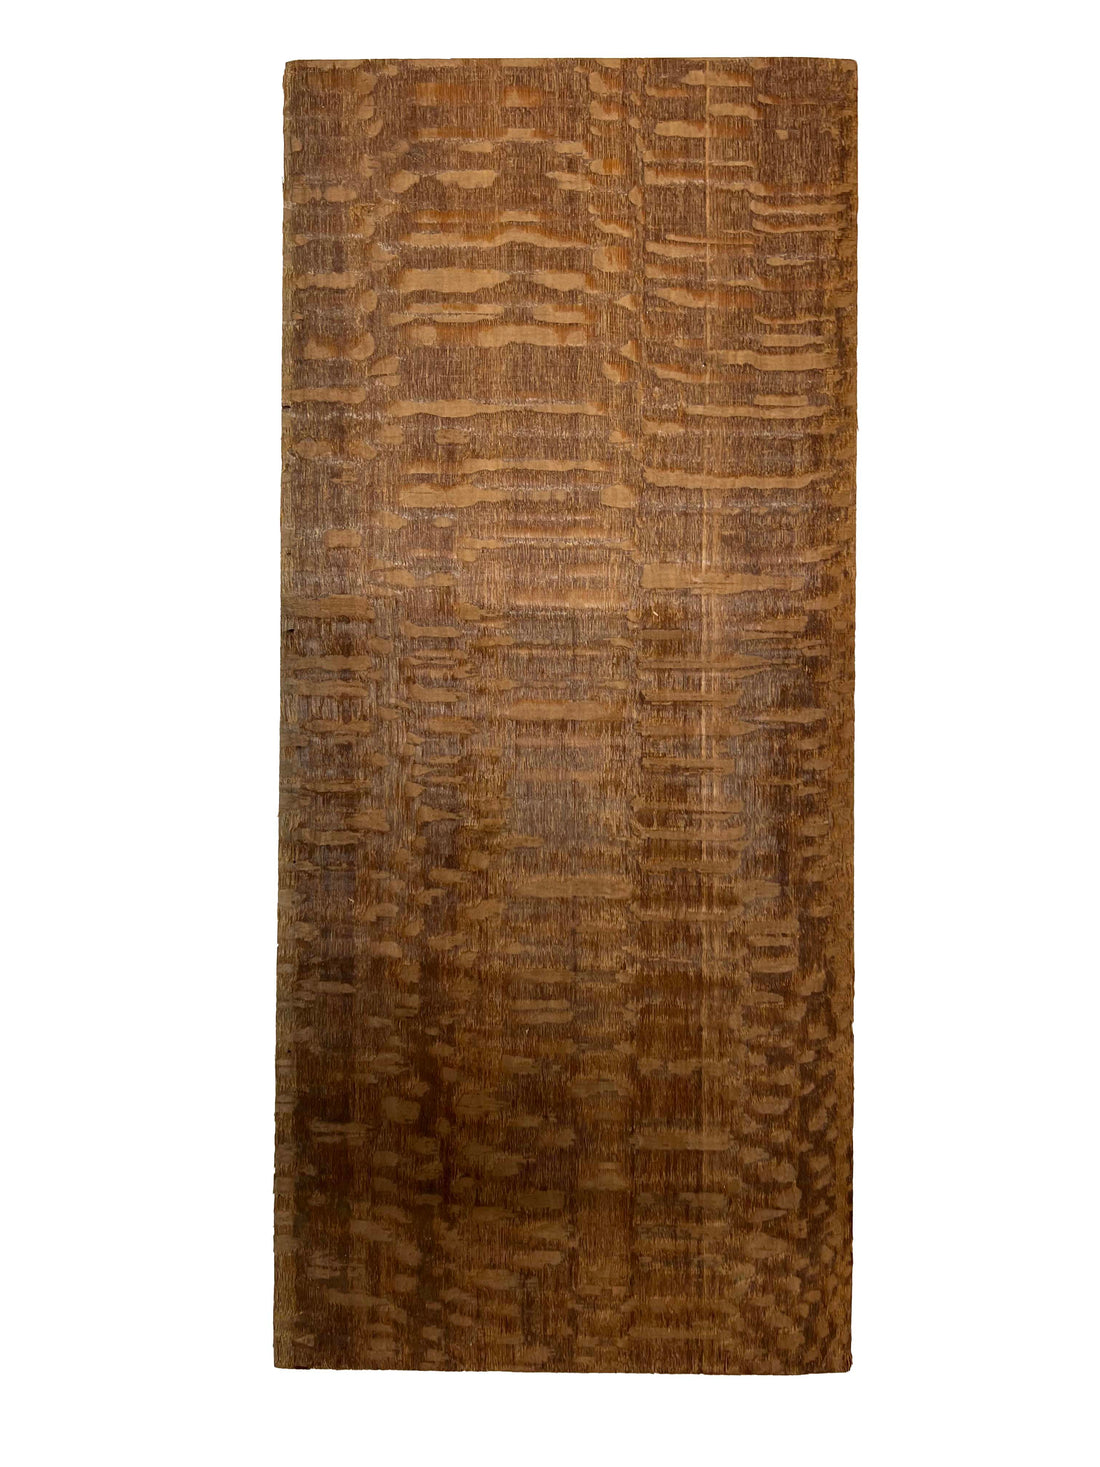 Lepardwood Thin Stock Three Dimensional Lumber Wood Blank 15&quot;x6-1/2&quot;x1&quot; 